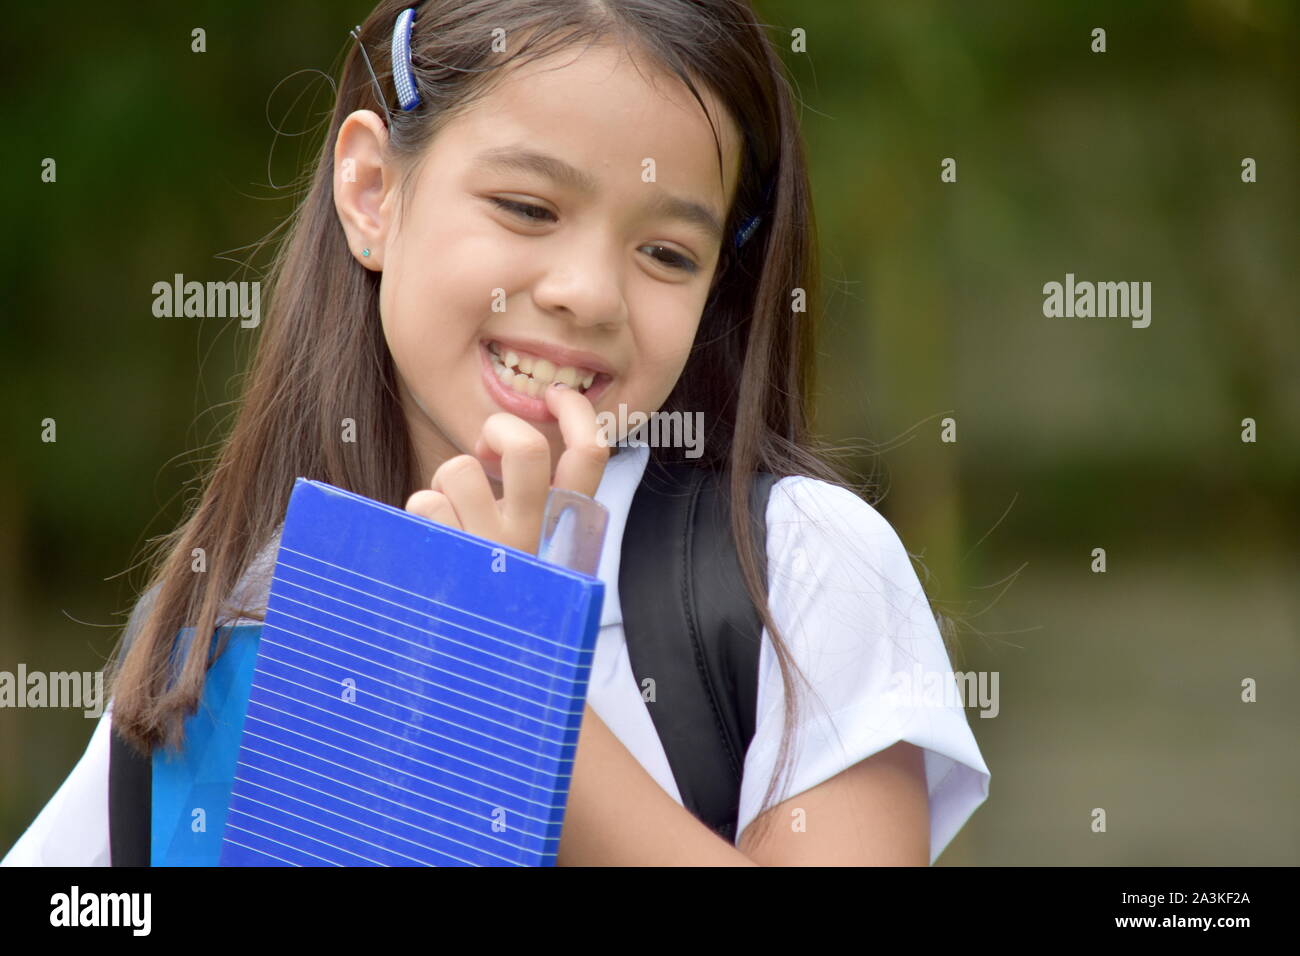 Shy Young Minority Child Girl Student Wearing School Uniform Stock Photo